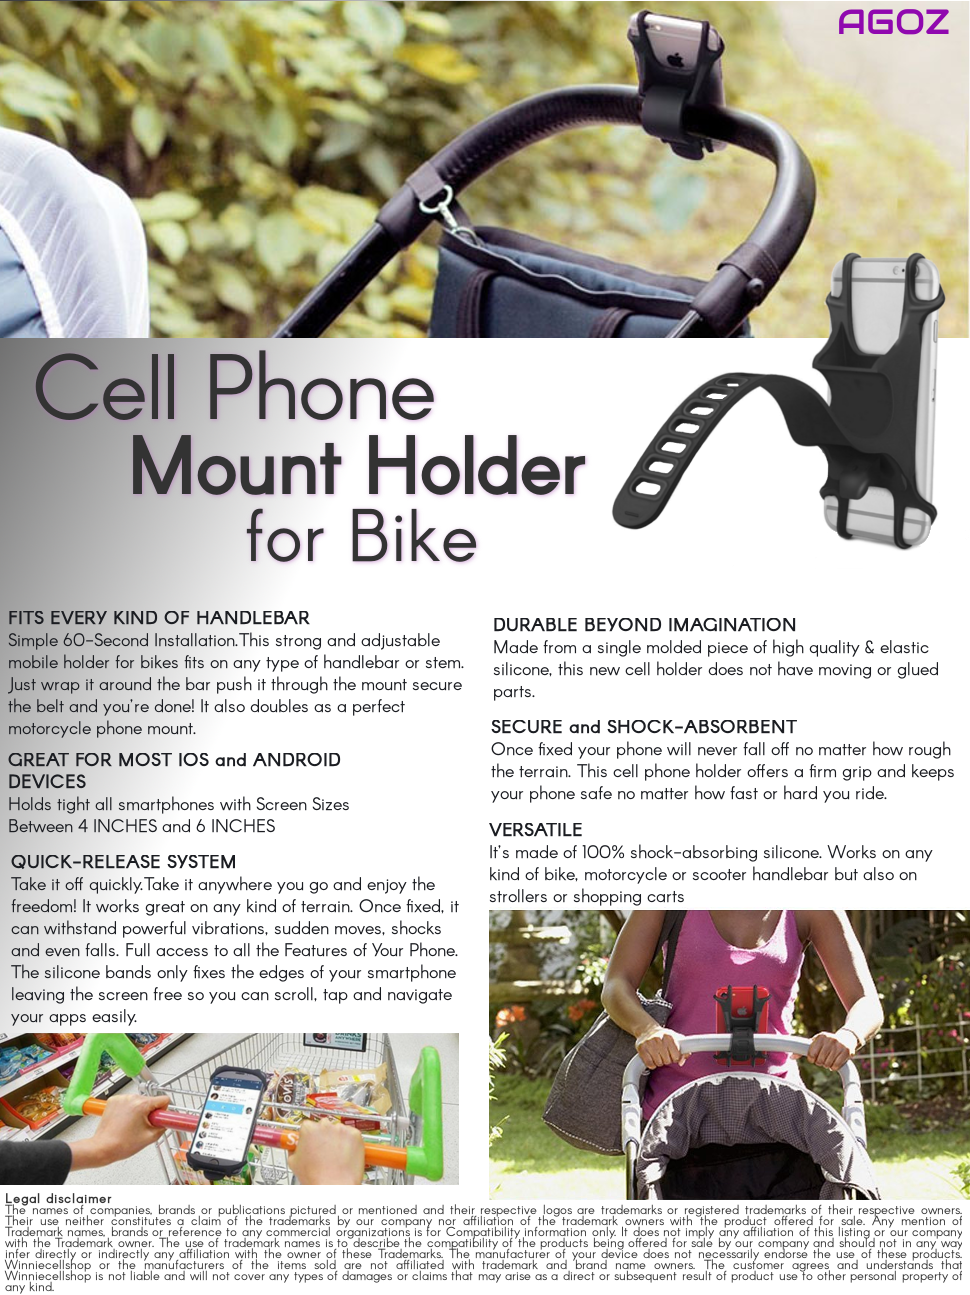 iphone stroller mount